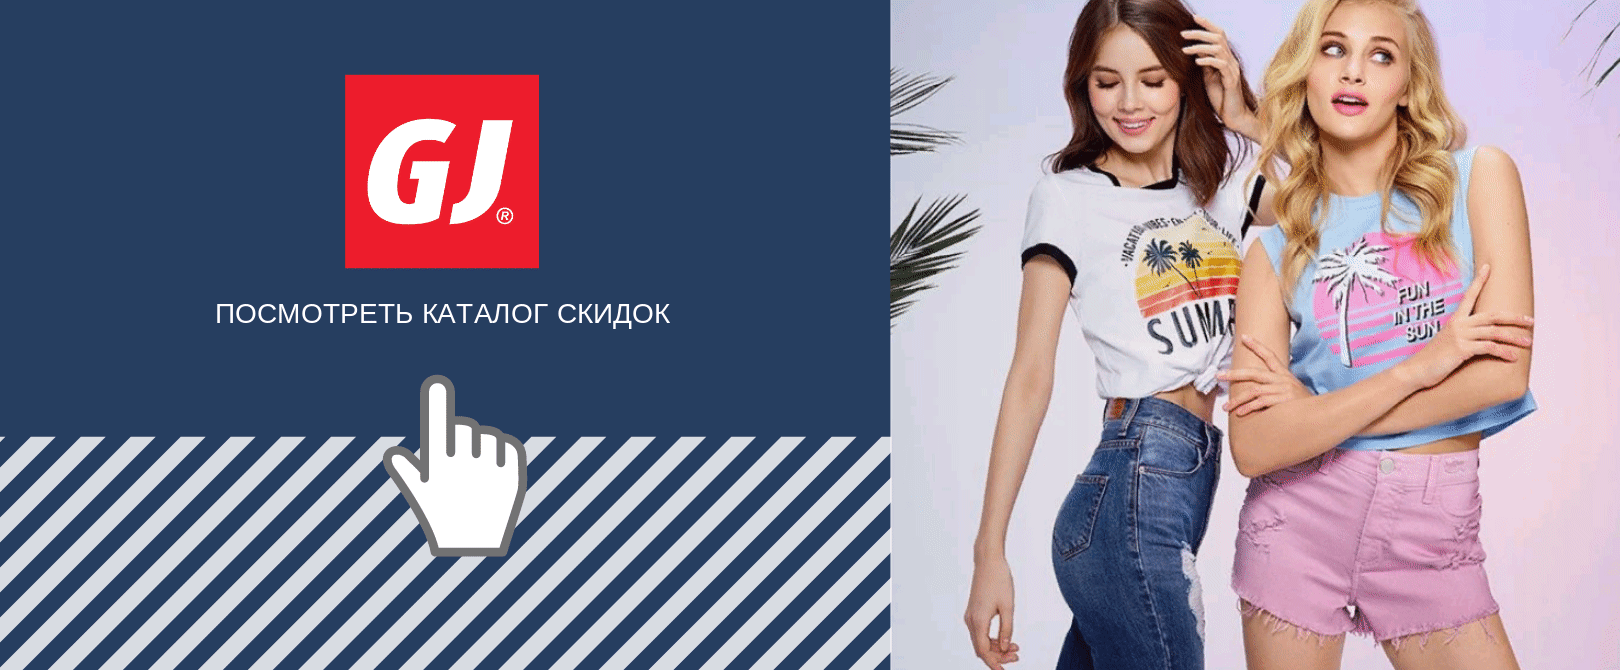 Gloria Jeans Детская Одежда Интернет Магазин Москва